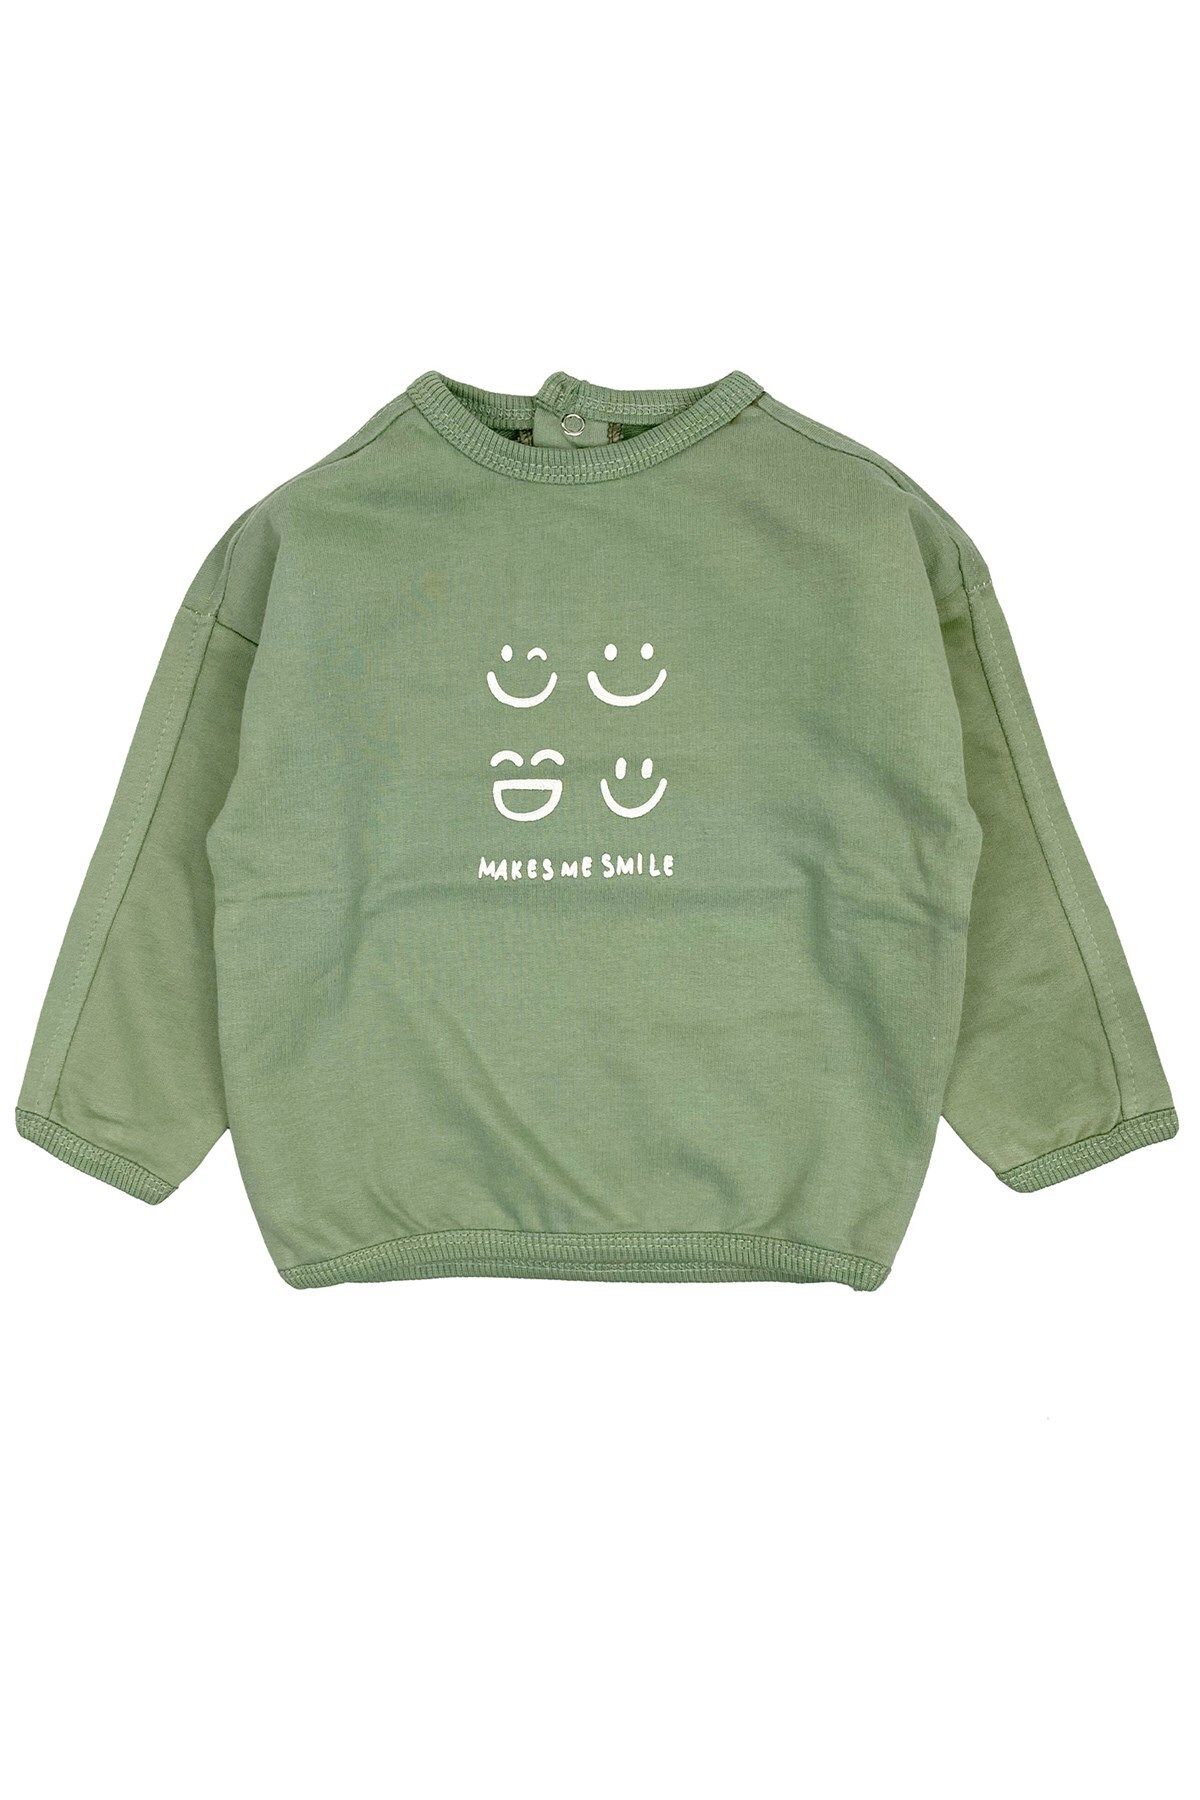 Tuffy Kids Makes Me Smile Bebek Sweatshirt Yeşil